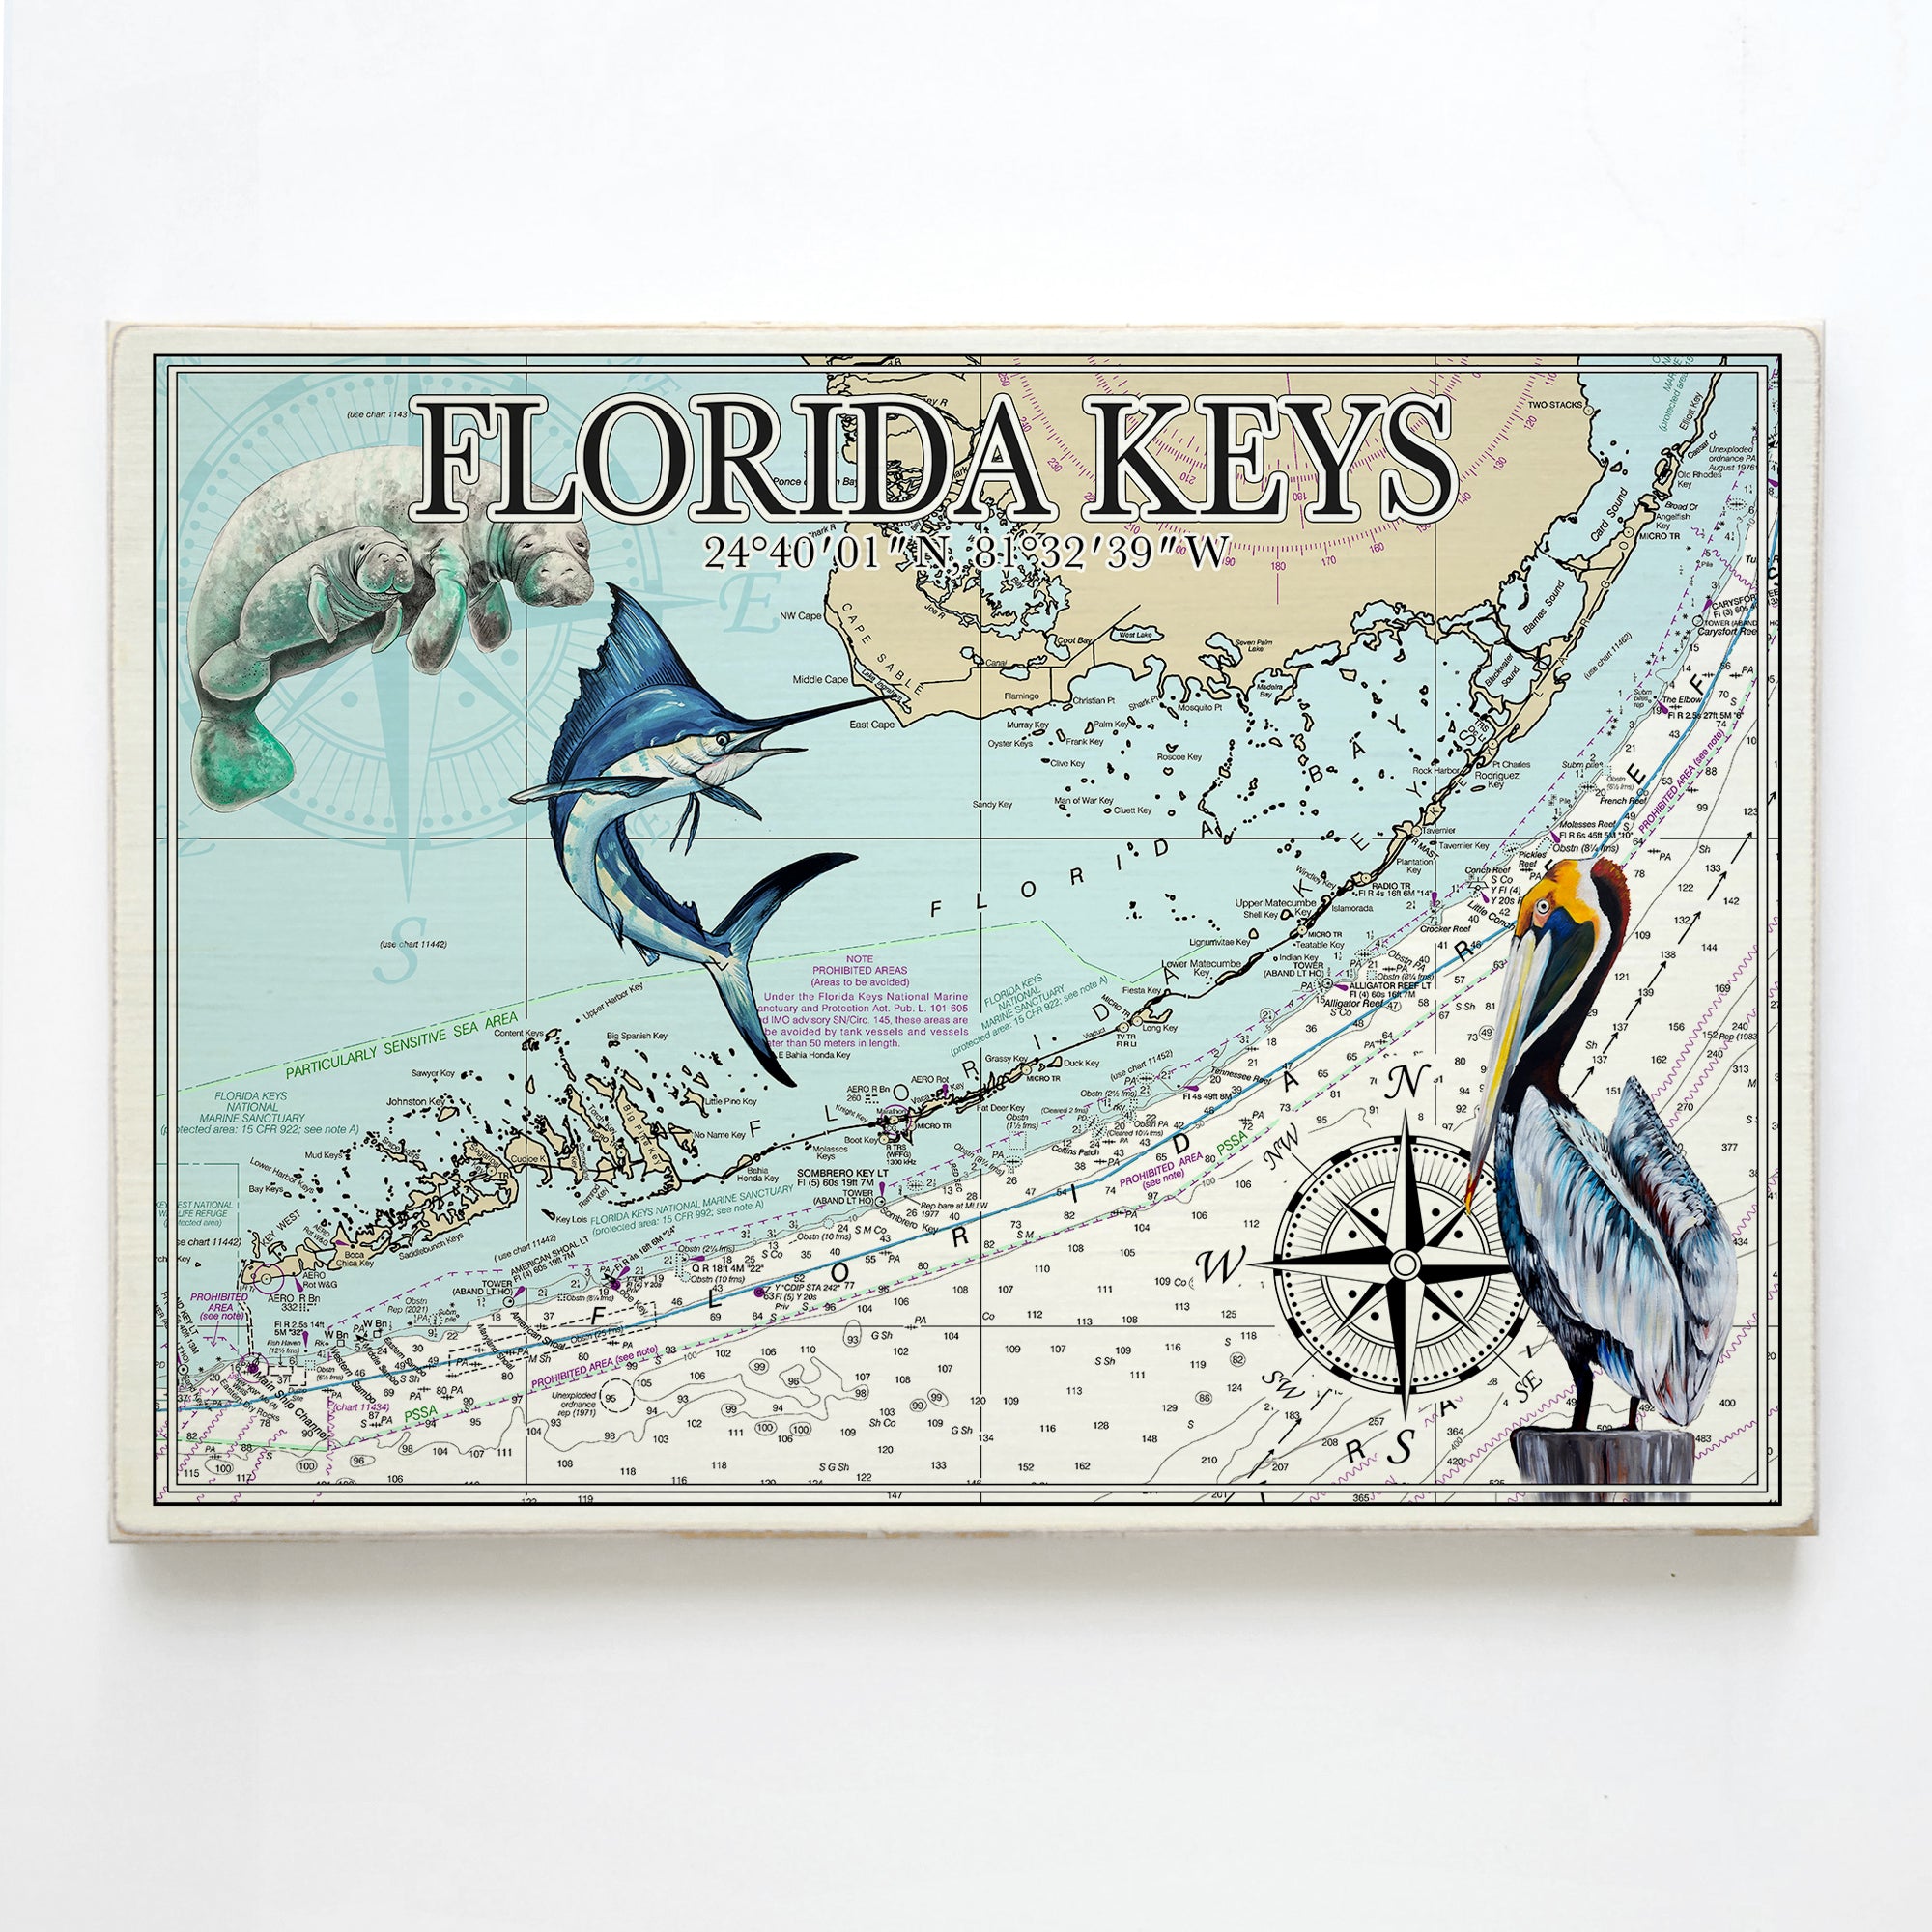 Florida Keys, FL  Pelican, Sailfish, Manatee Plank Map